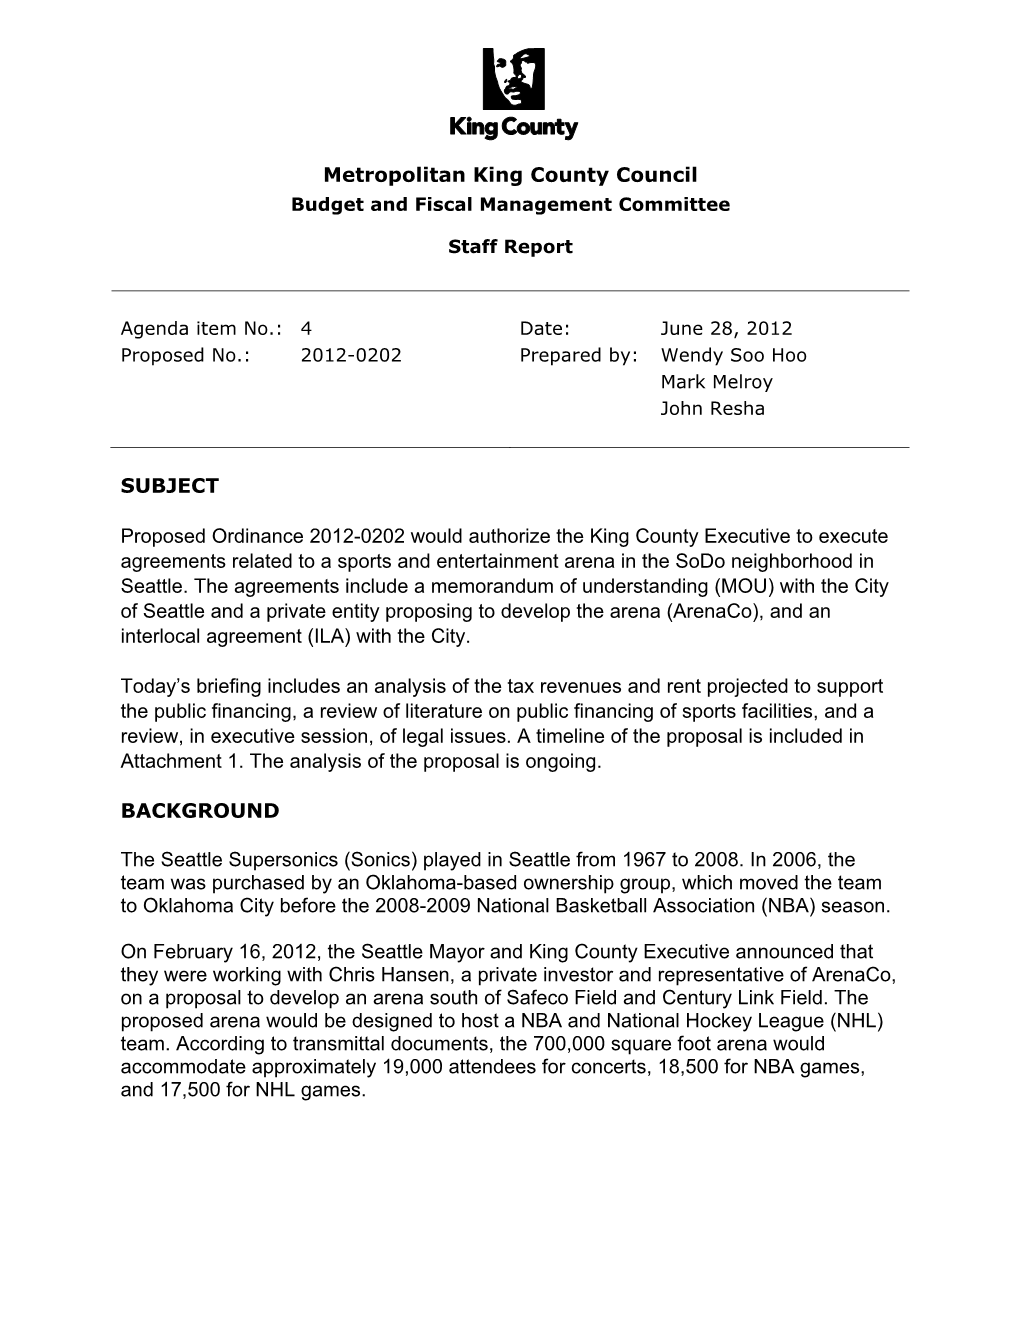 Metropolitan King County Council SUBJECT Proposed Ordinance